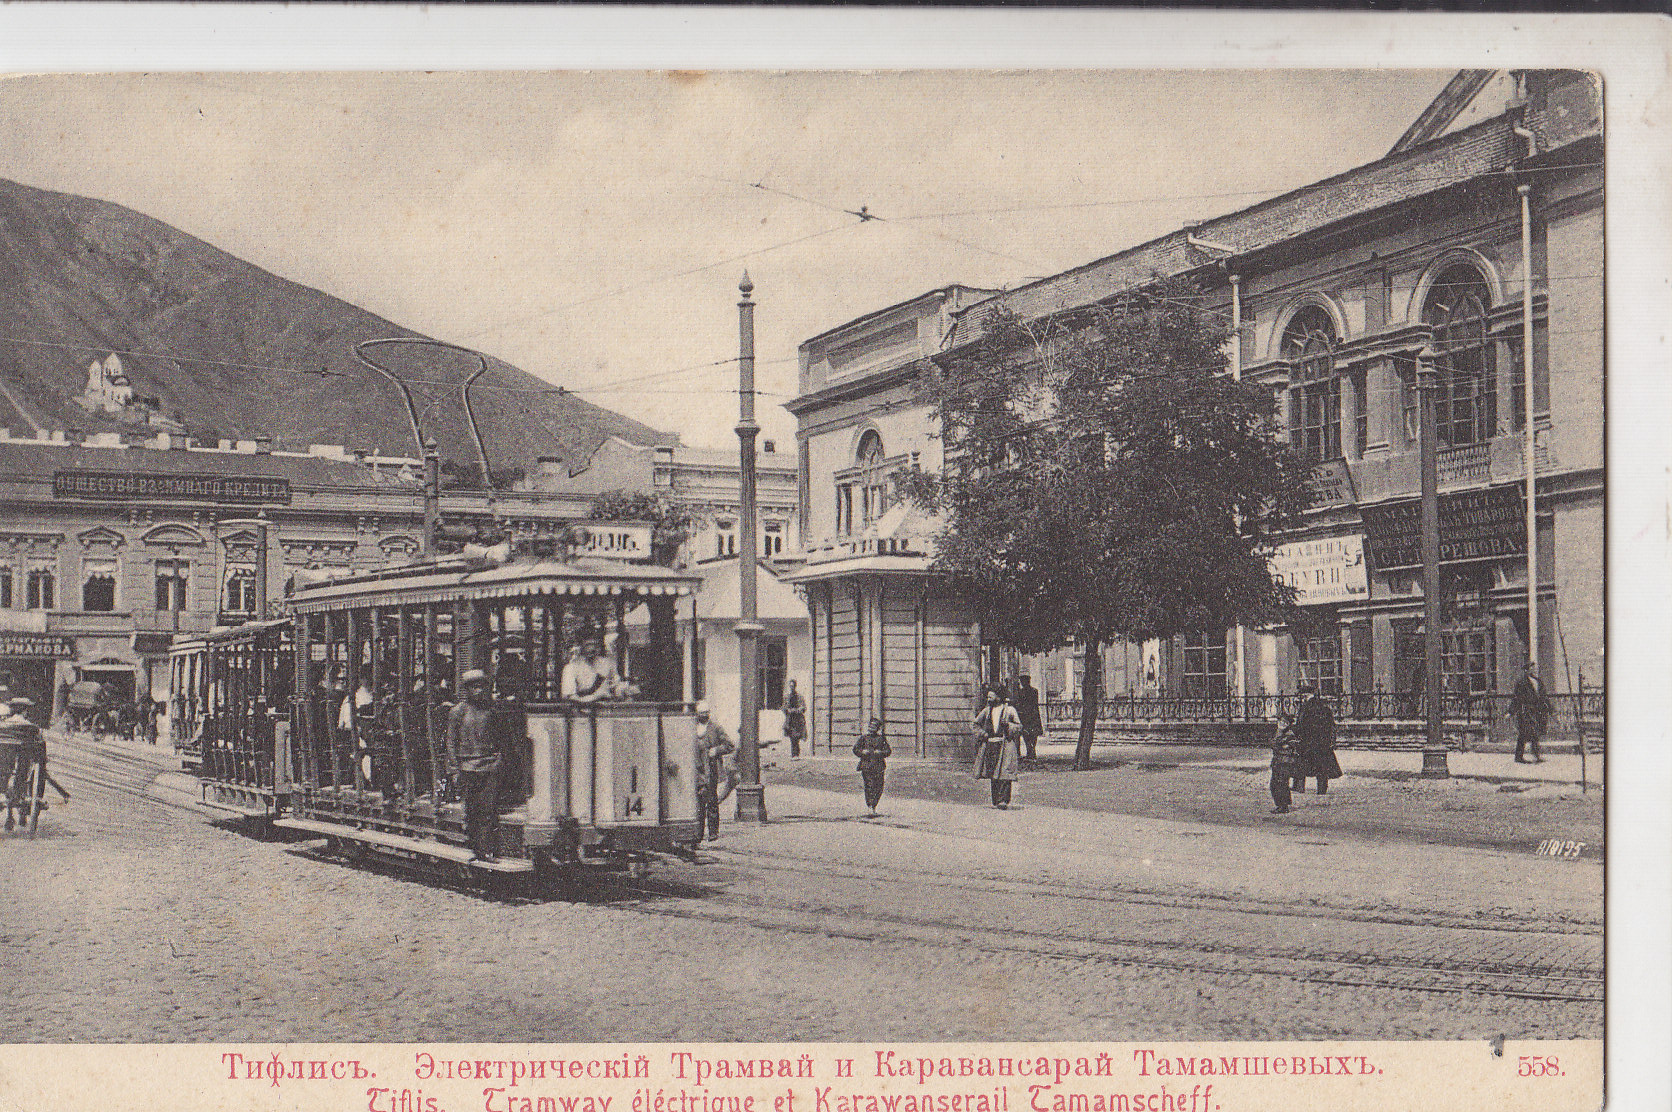 Tbilisi, 2-axle motor car č. 14; Tbilisi — Narrow gauge tram